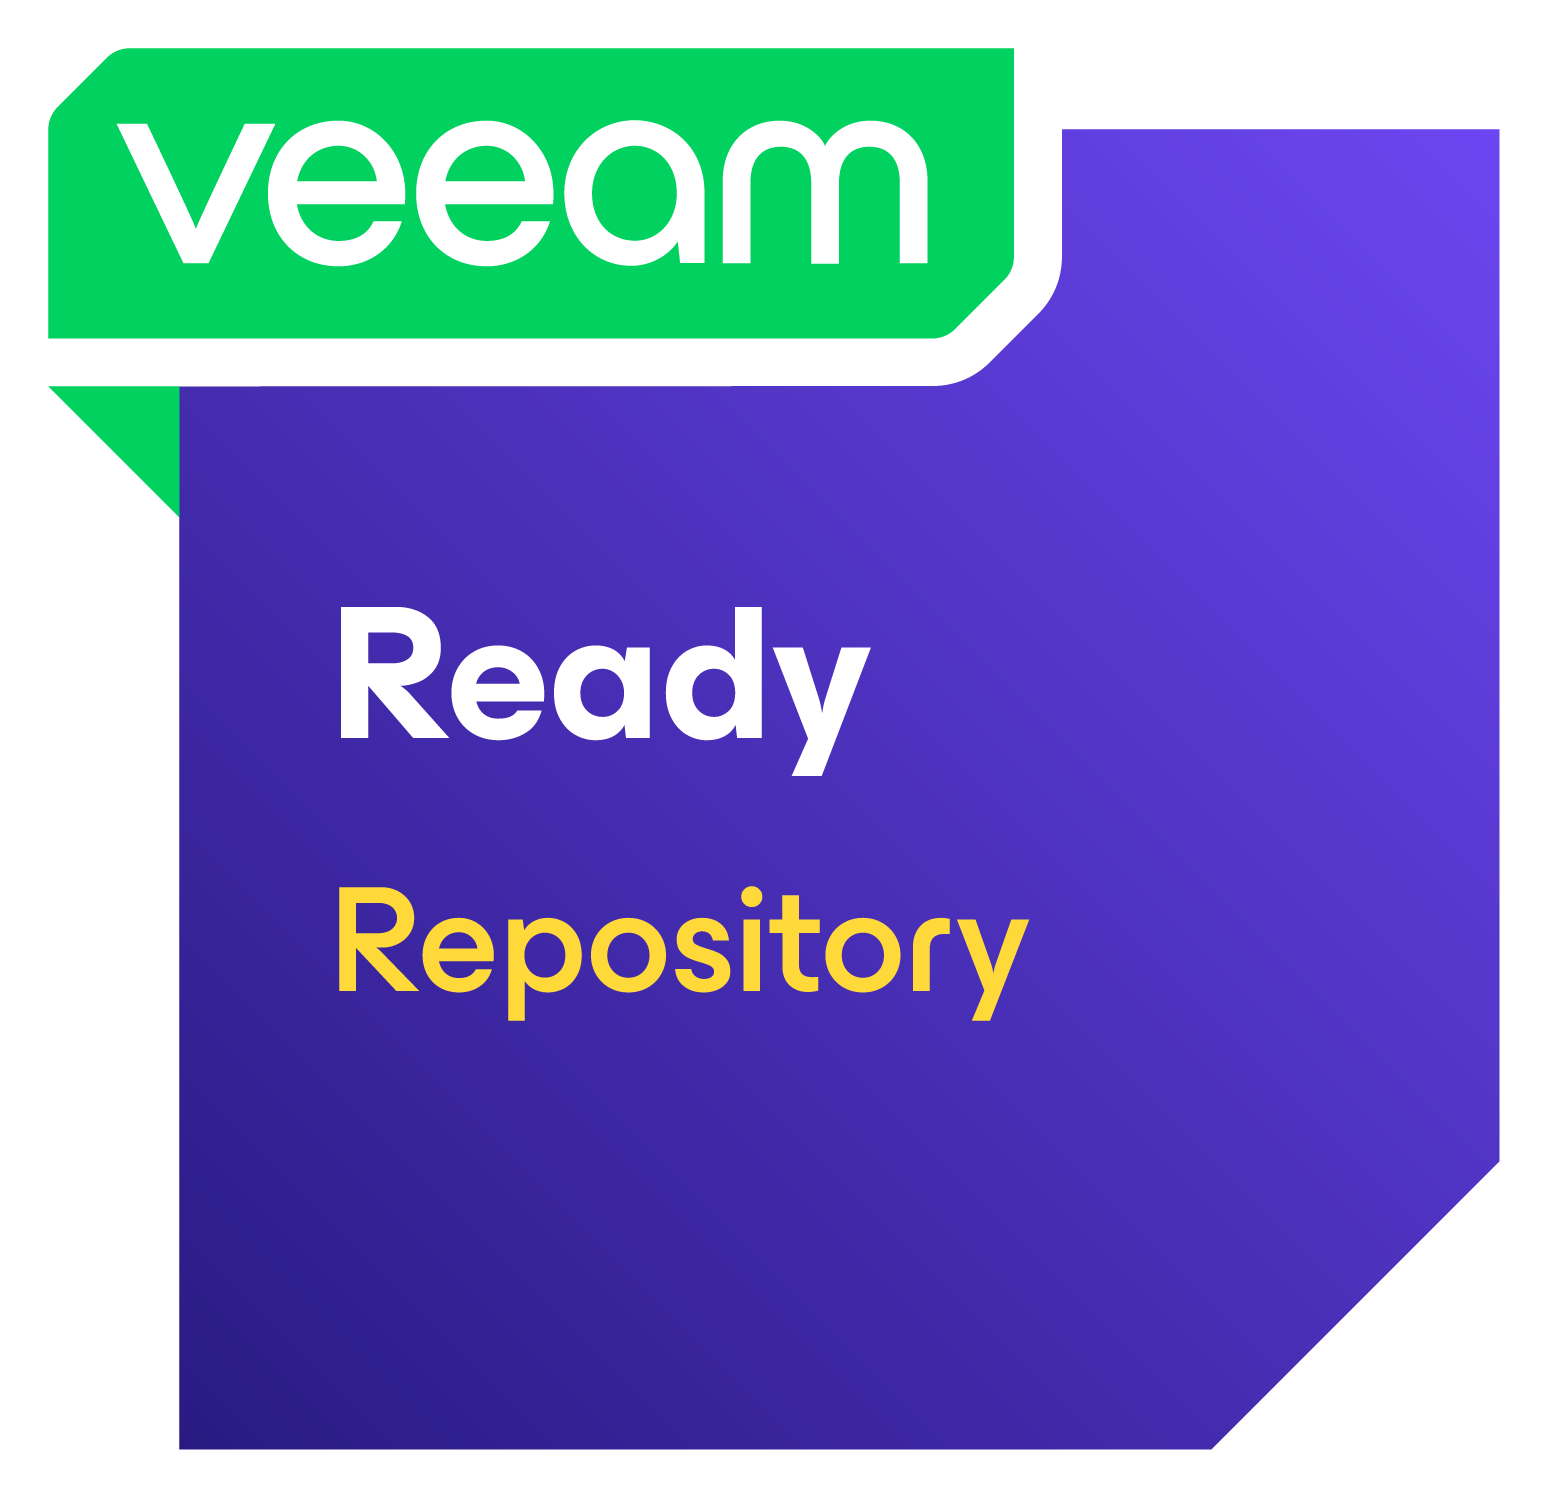 Veeam ready repository